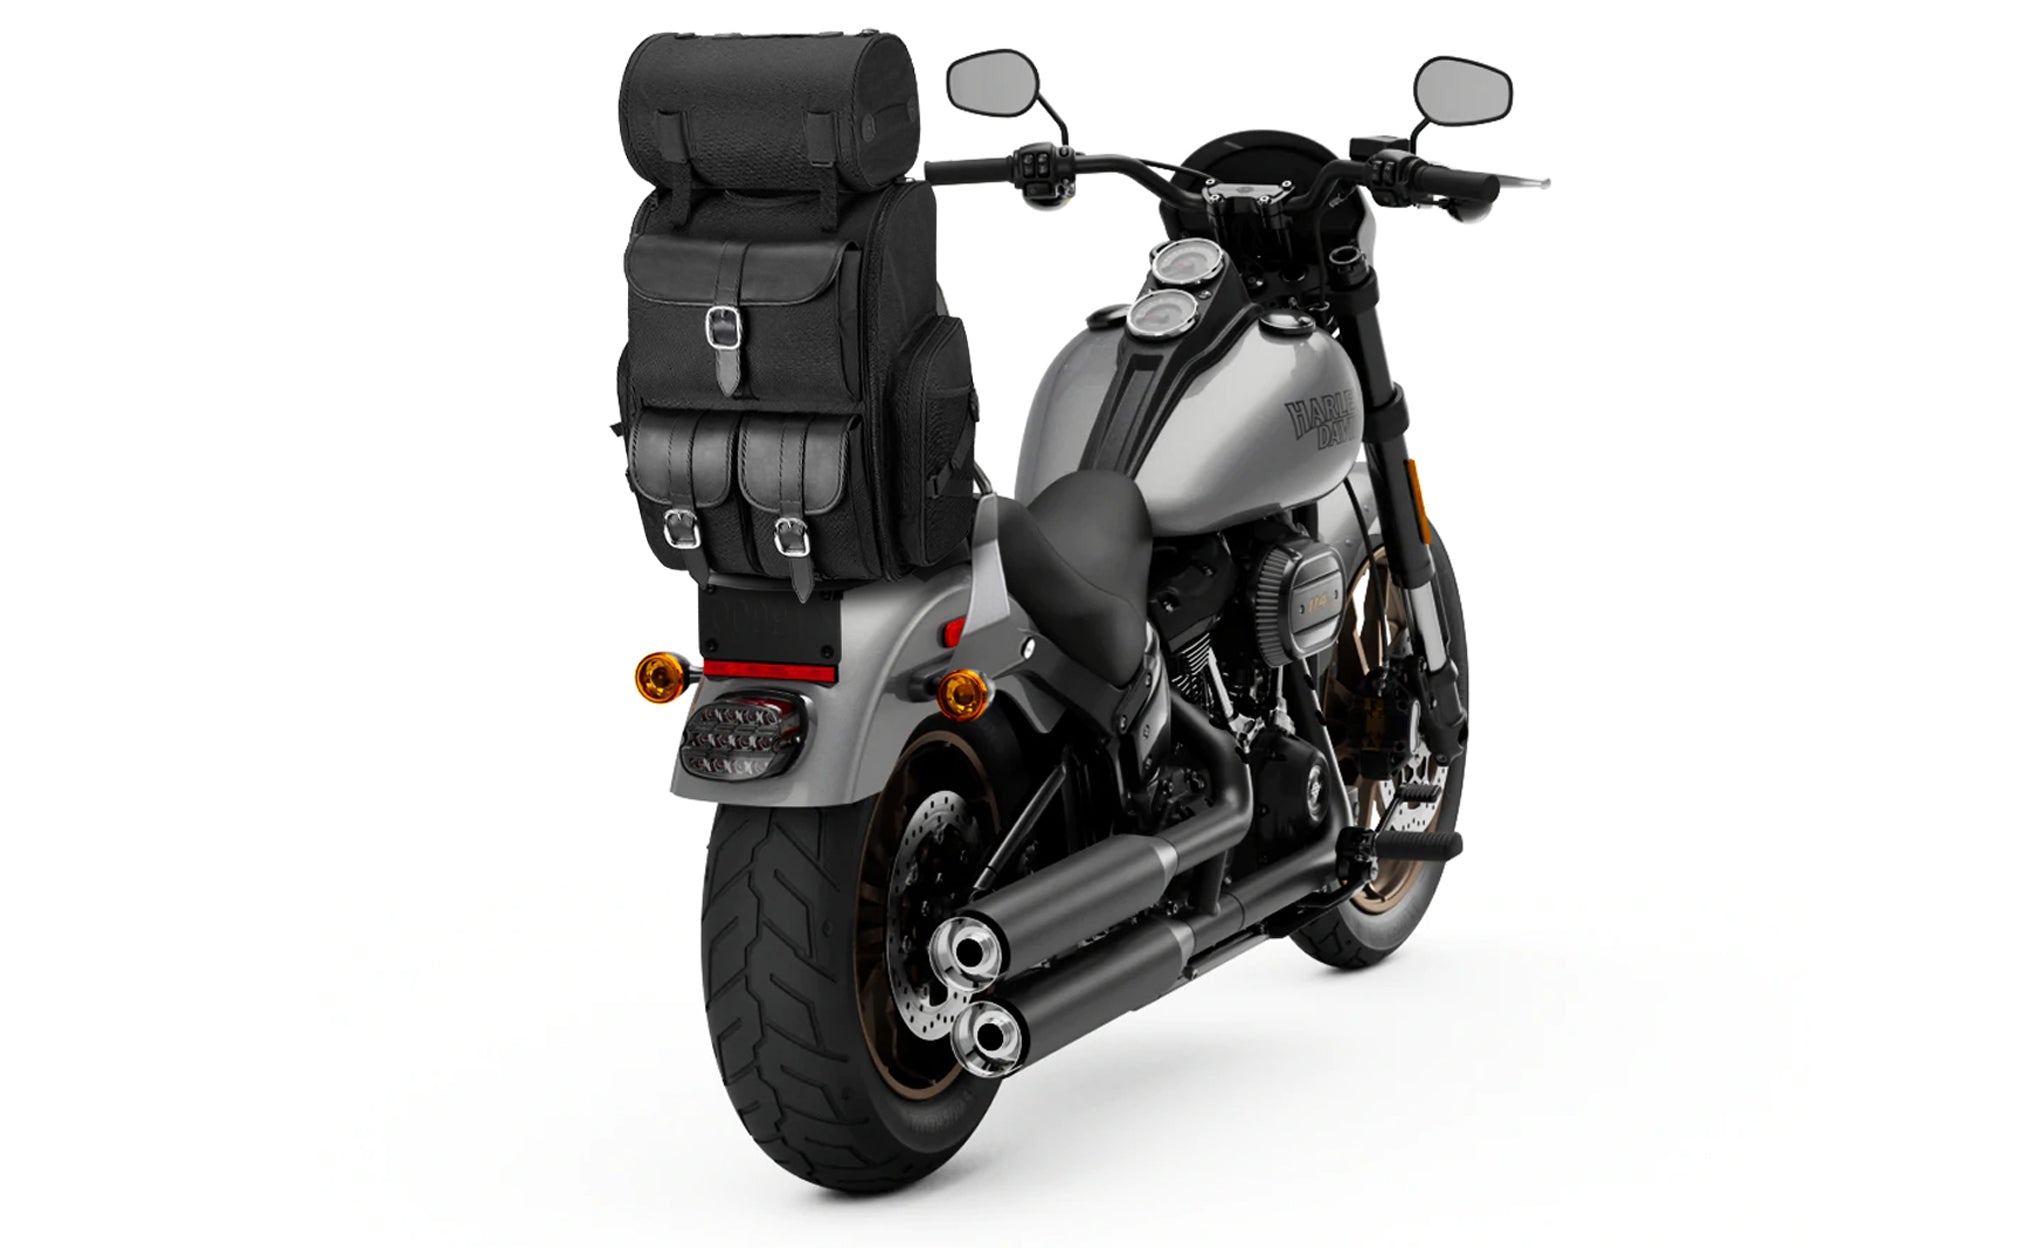 Viking Highway Extra Large Plain Honda Motorcycle Tail Bag Bag on Bike View @expand